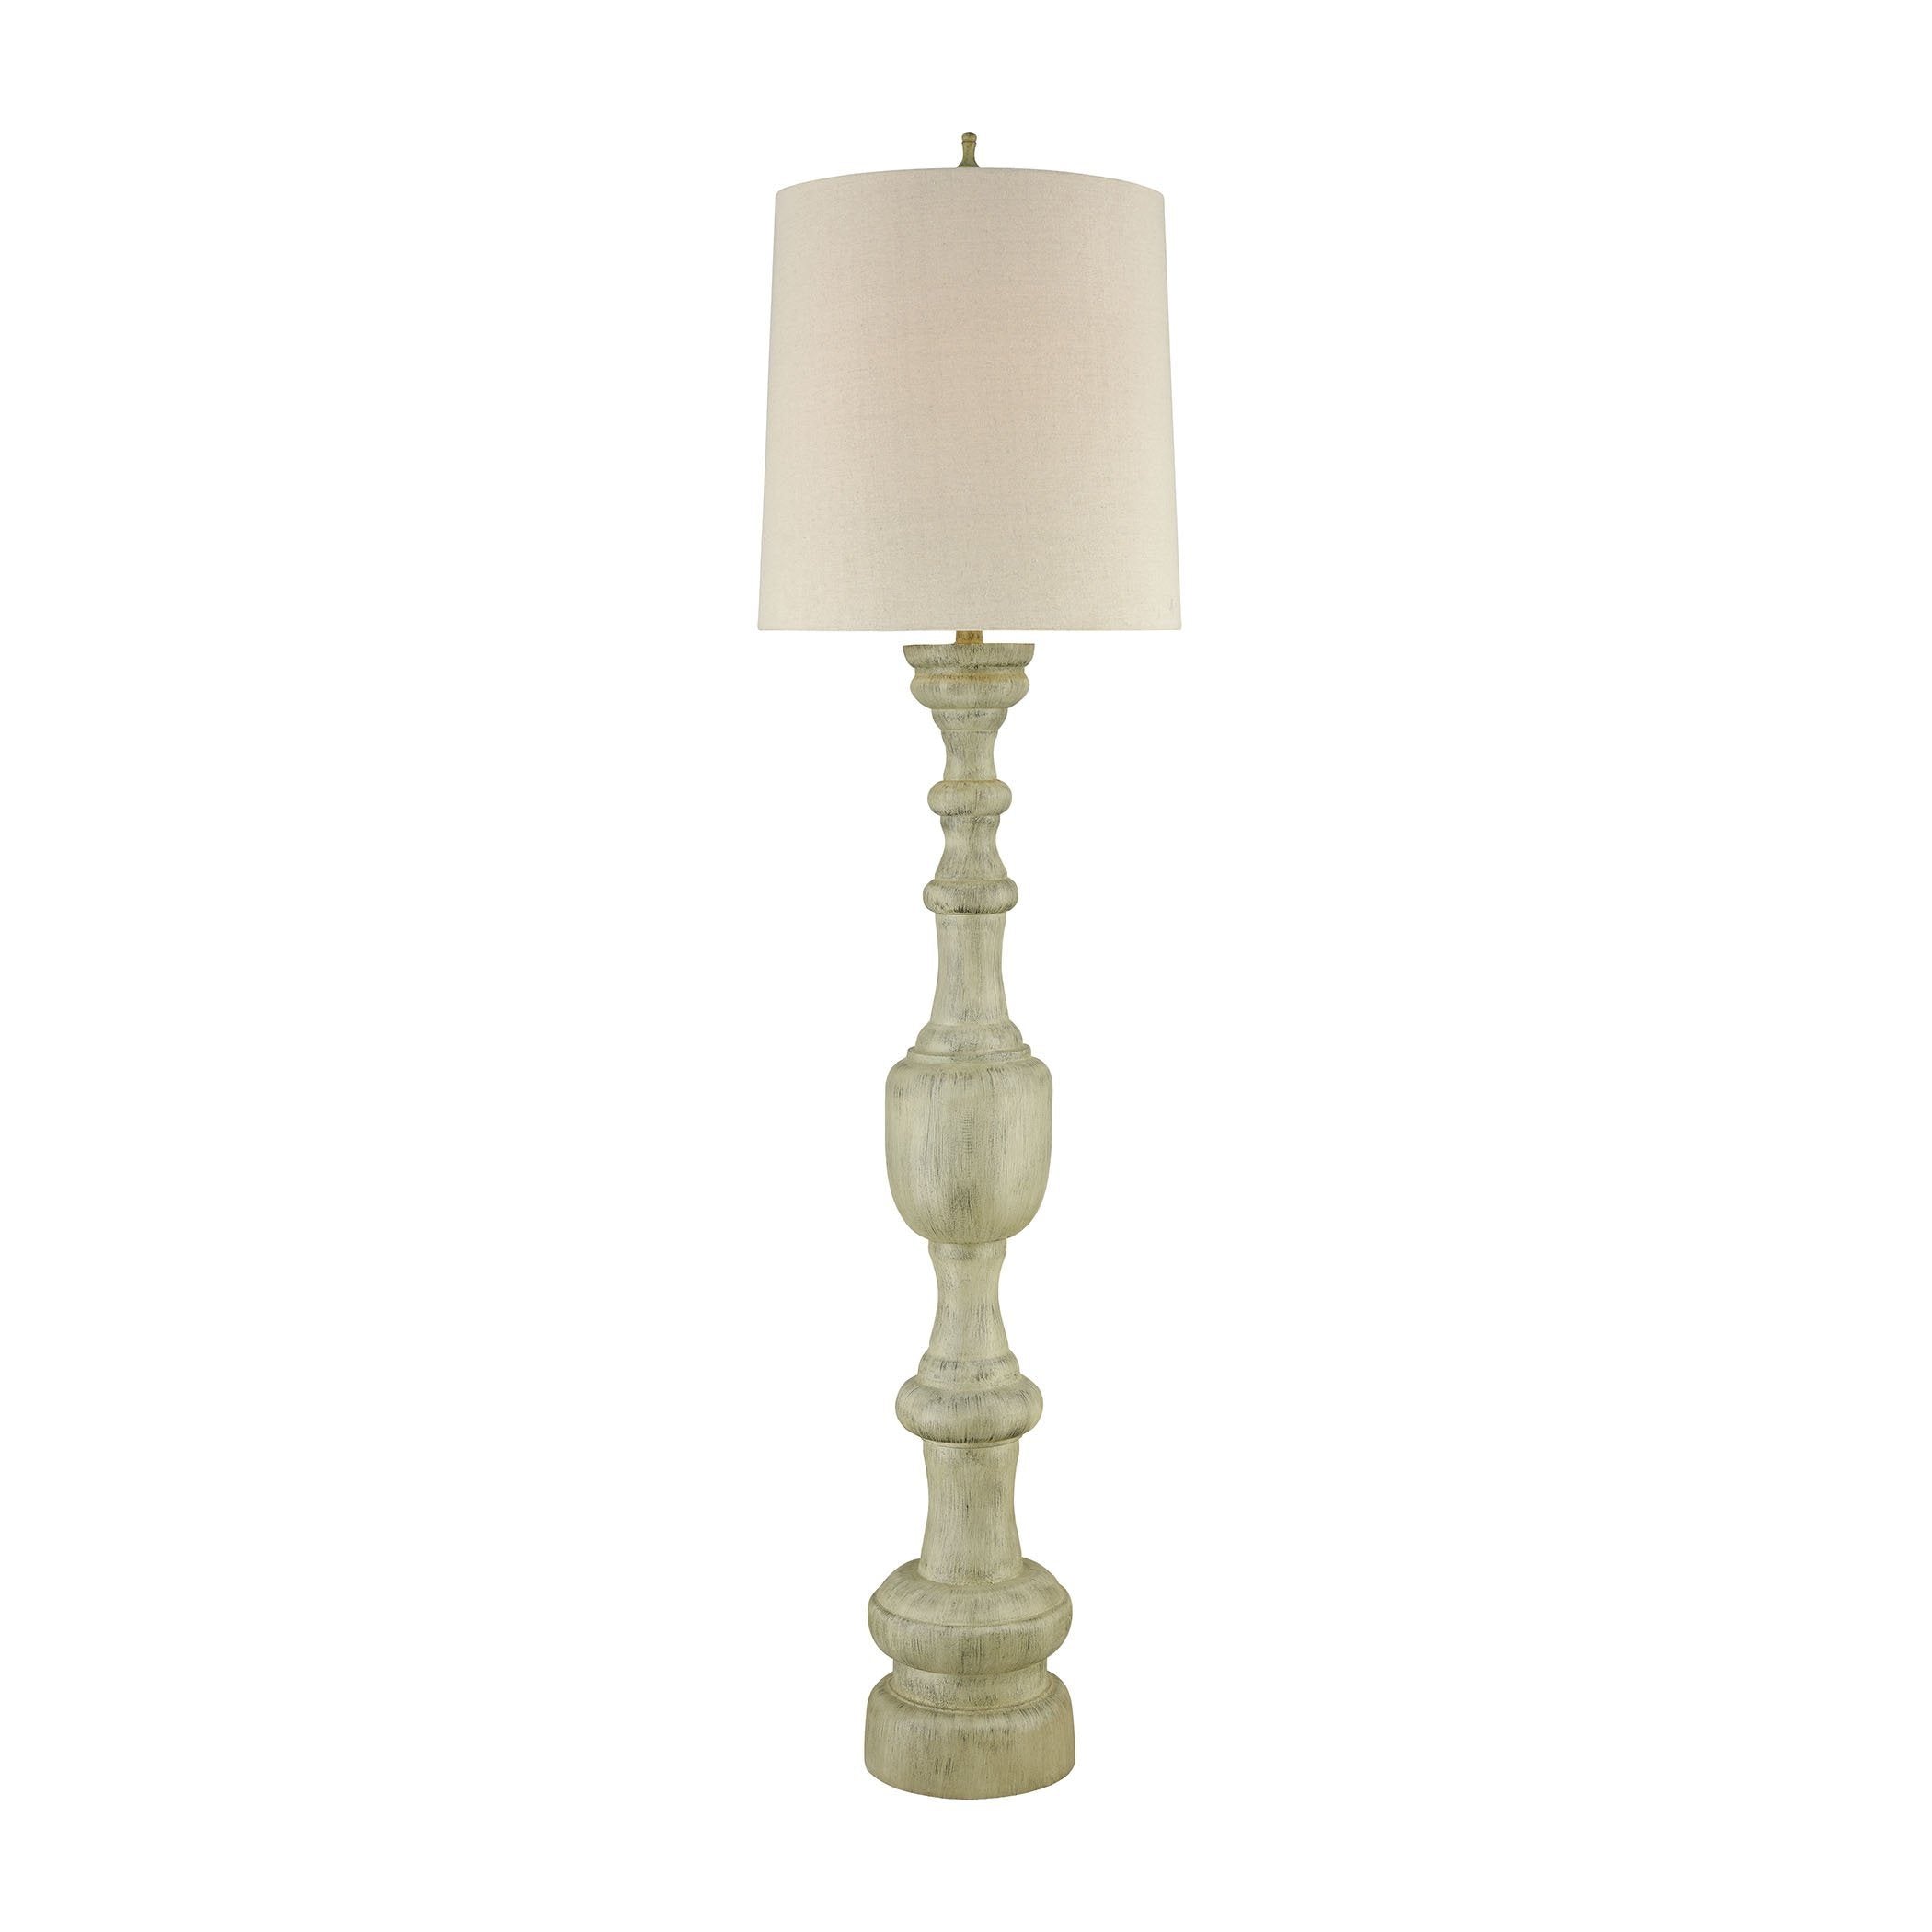 Summerhouse Floor Lamp - Sage Lamps Dimond Lighting 